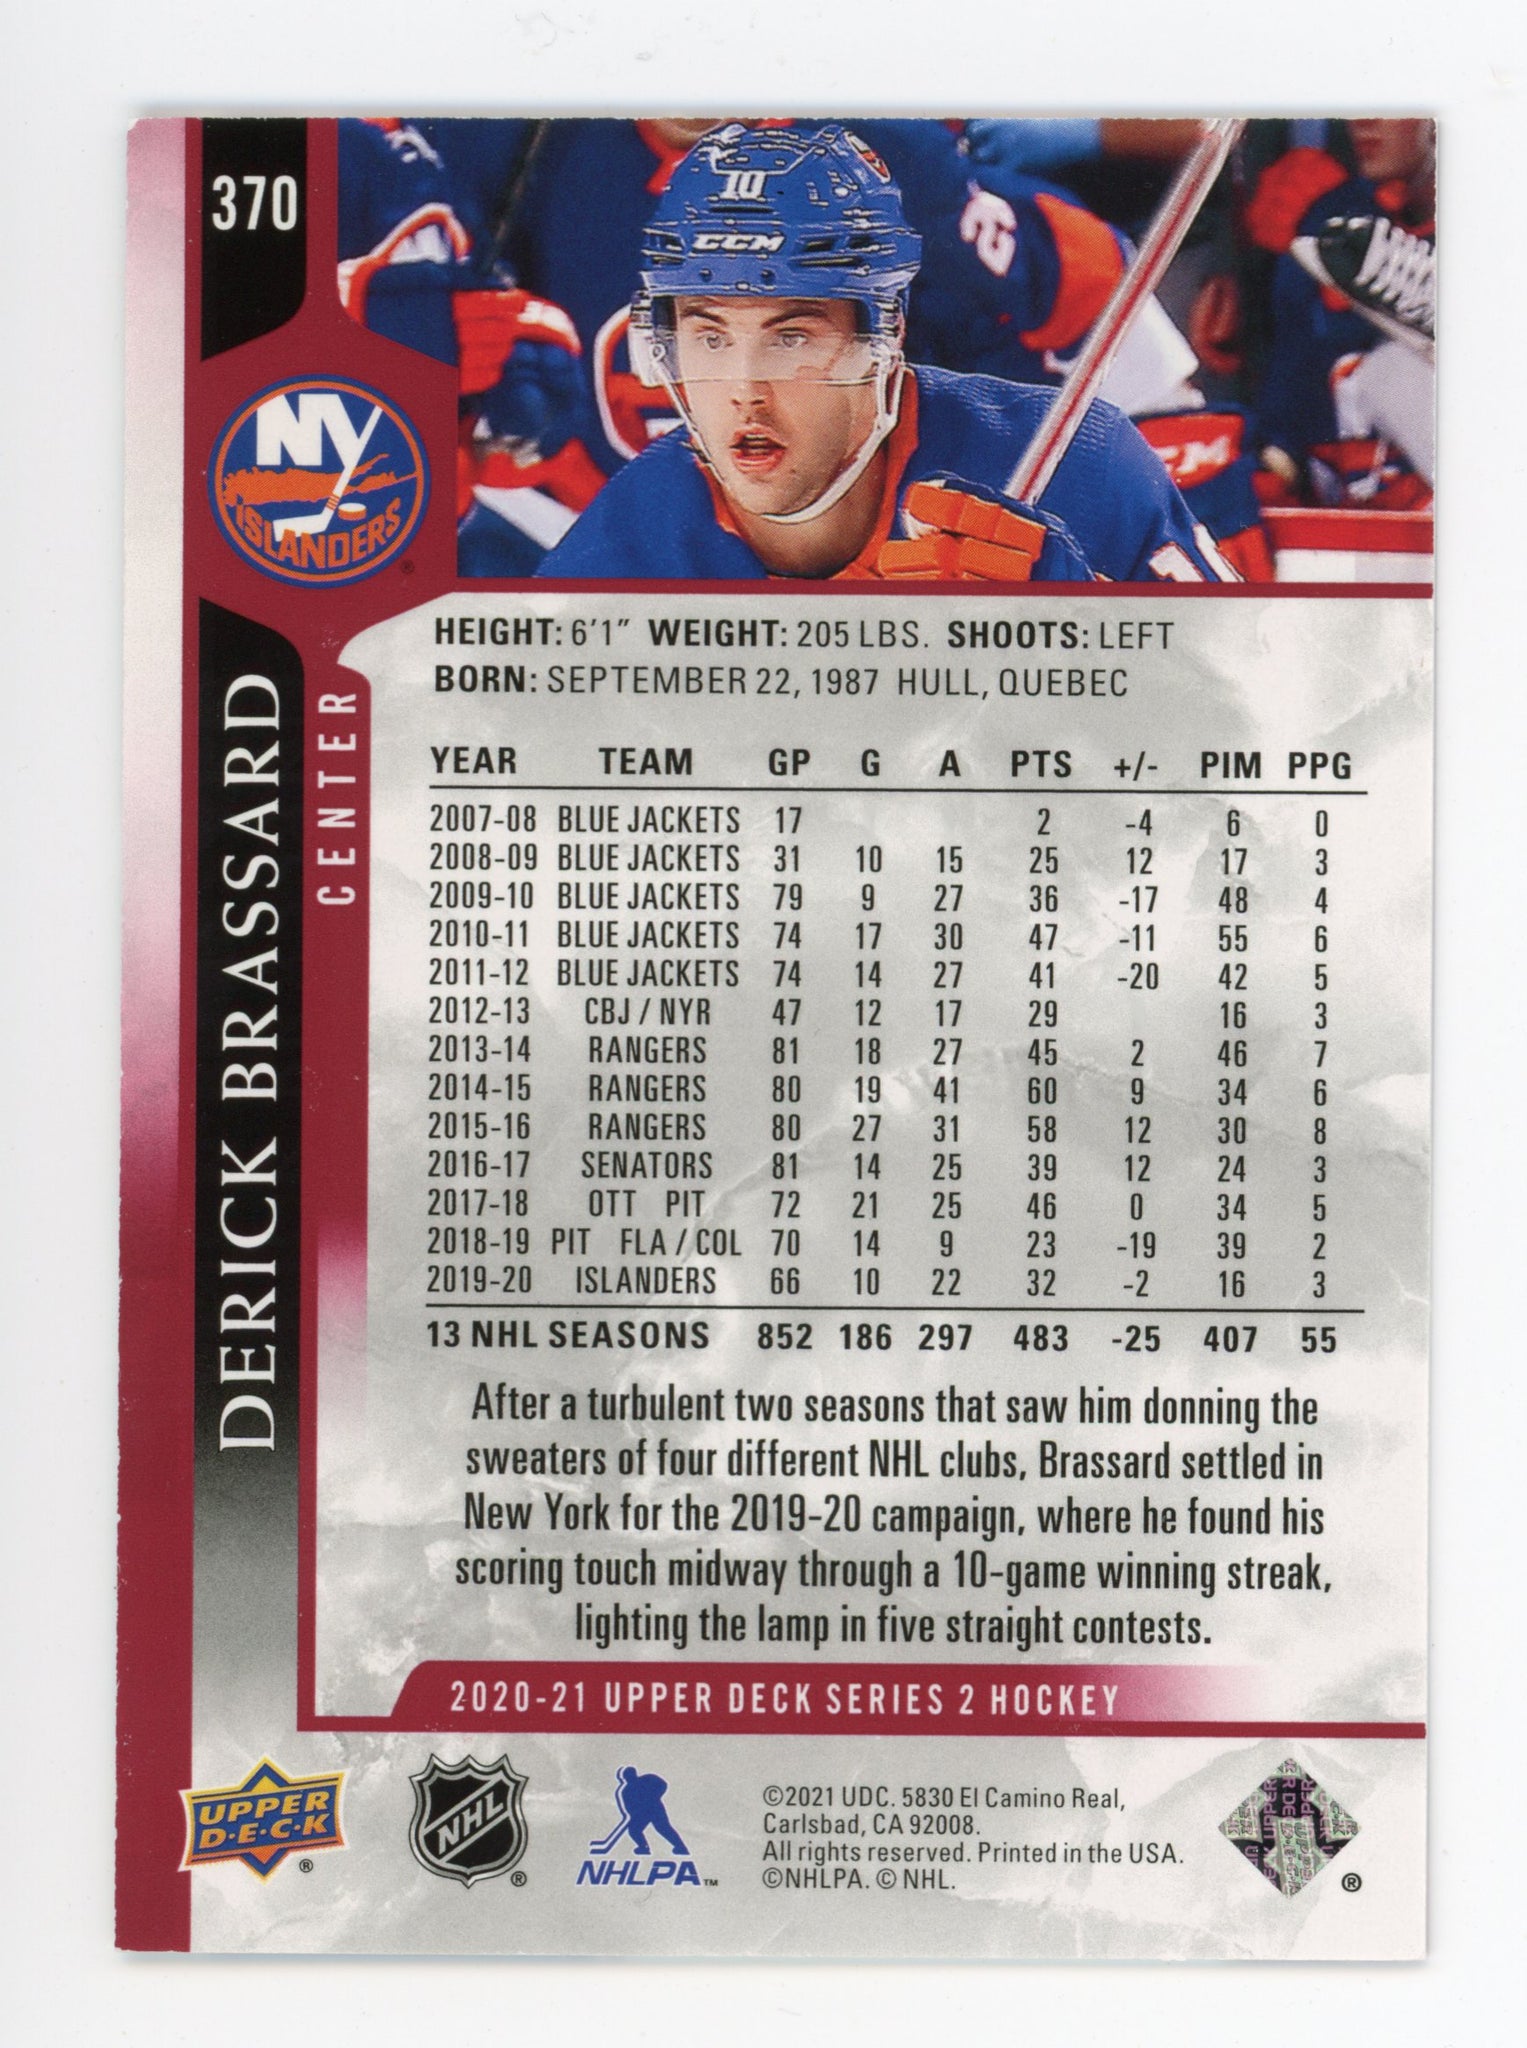 2020-2021 Derick Brassard Exclusives #d /100 Upper Deck Series 2 New York Islanders #370